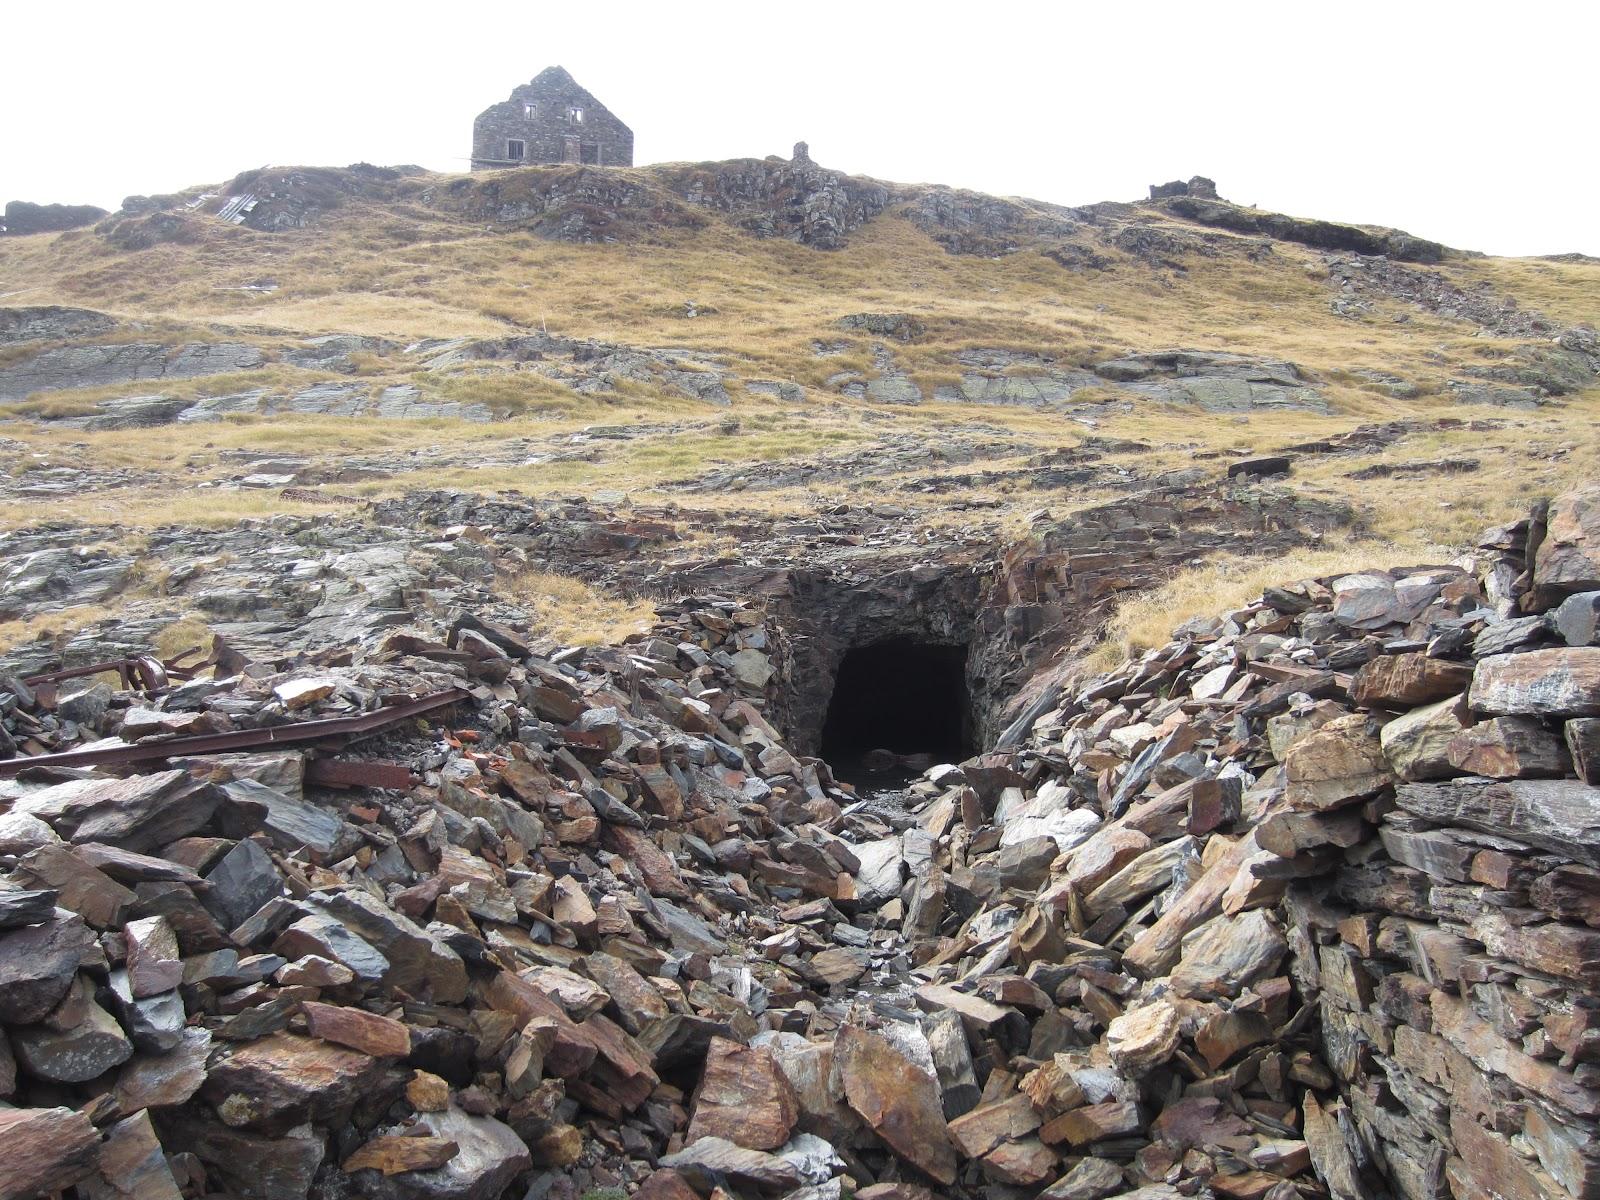 Les mines tancades, espais idonis per encapsular CO2